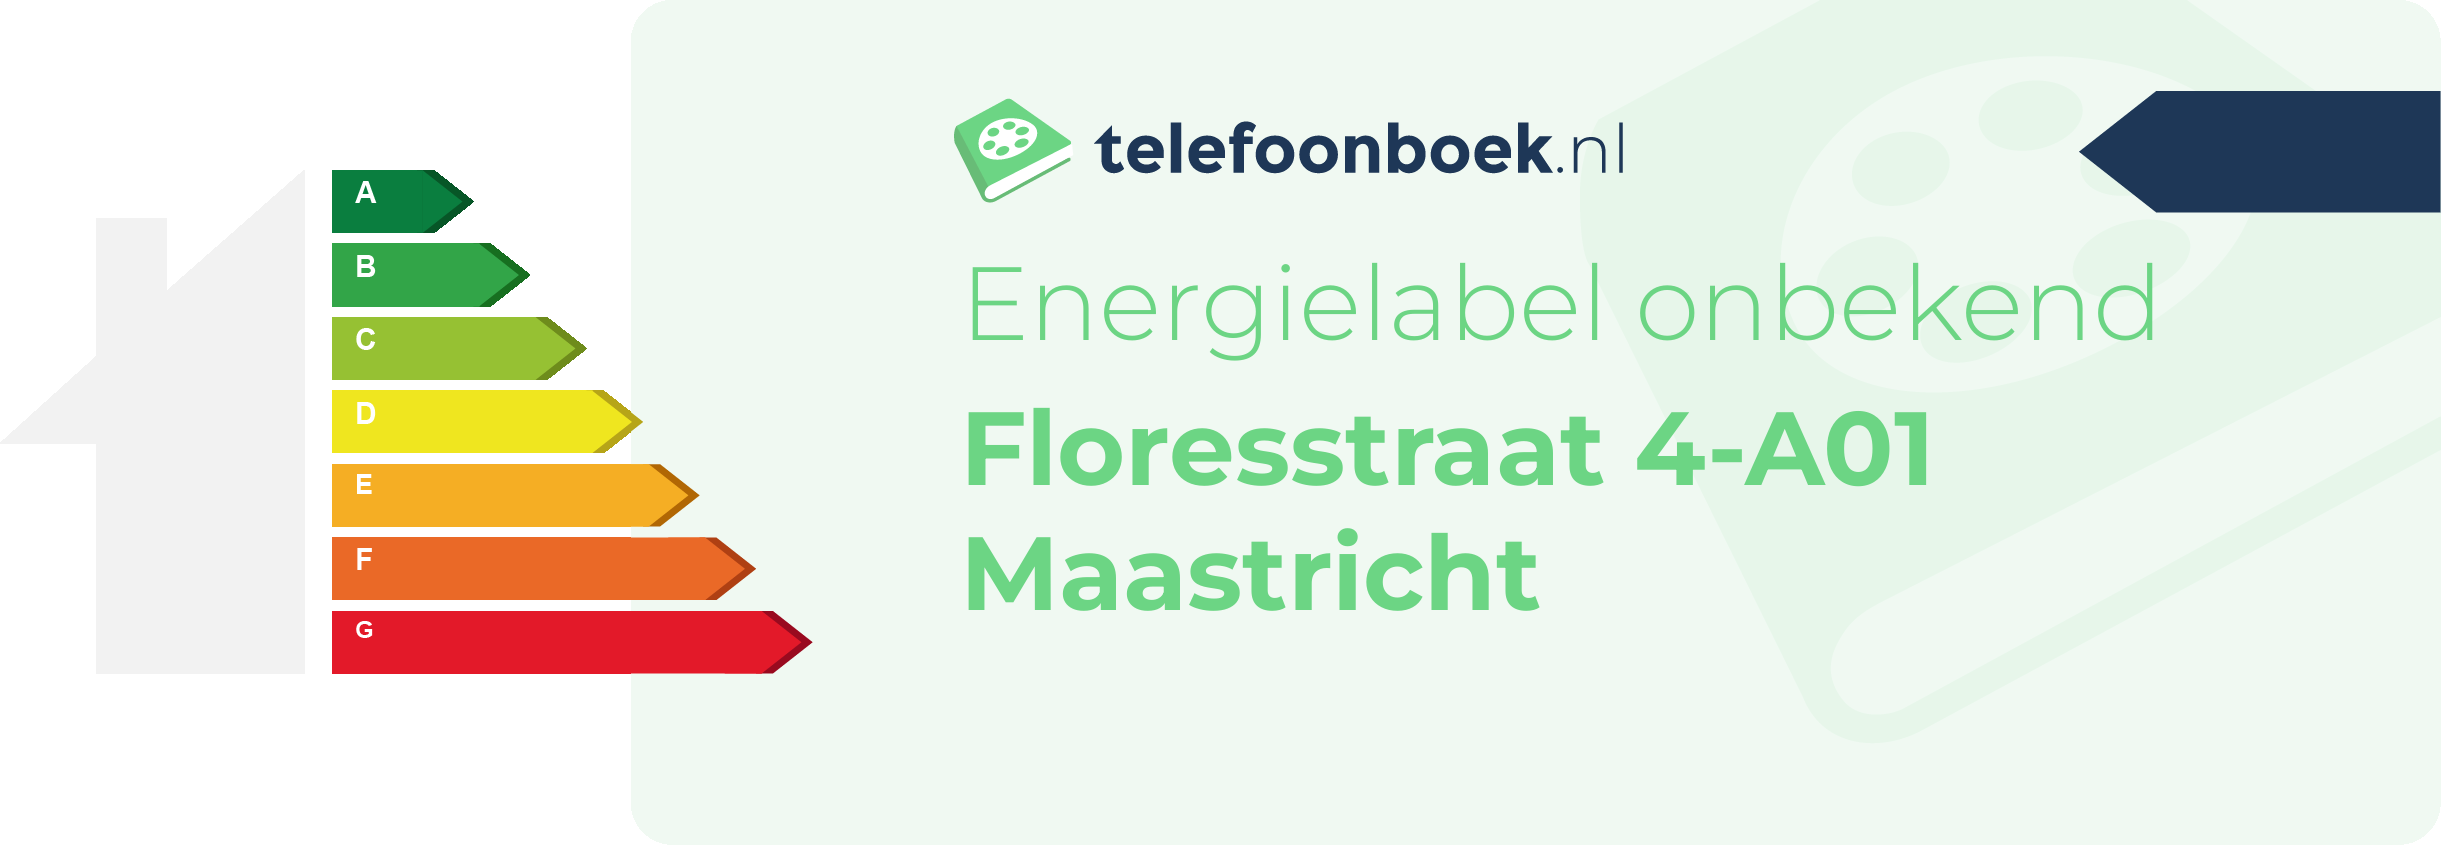 Energielabel Floresstraat 4-A01 Maastricht